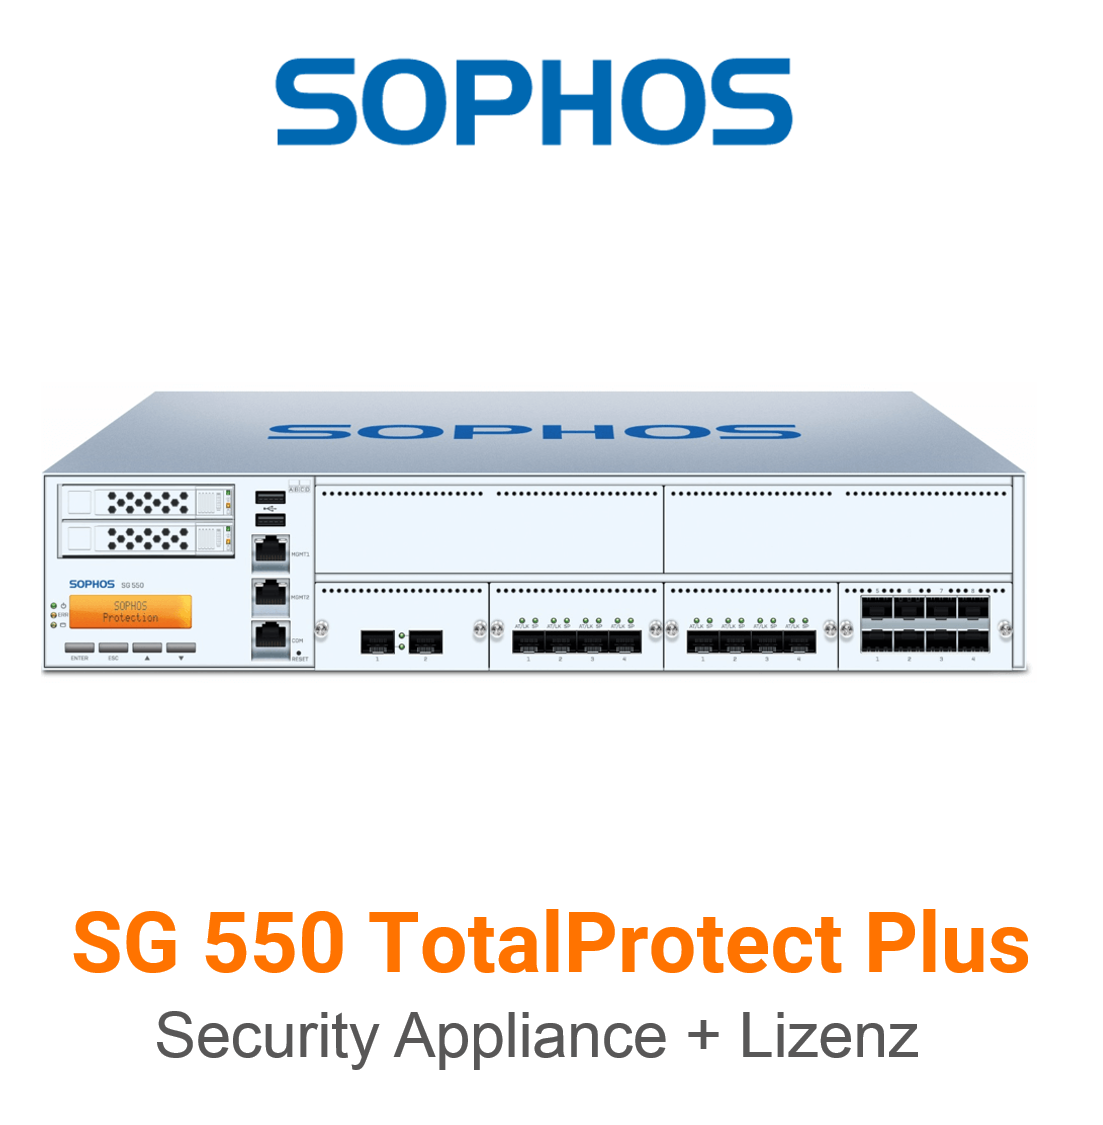 Sophos SG 550 TotalProtect Plus Bundle (Hardware + Lizenz) (End of Sale/Life)